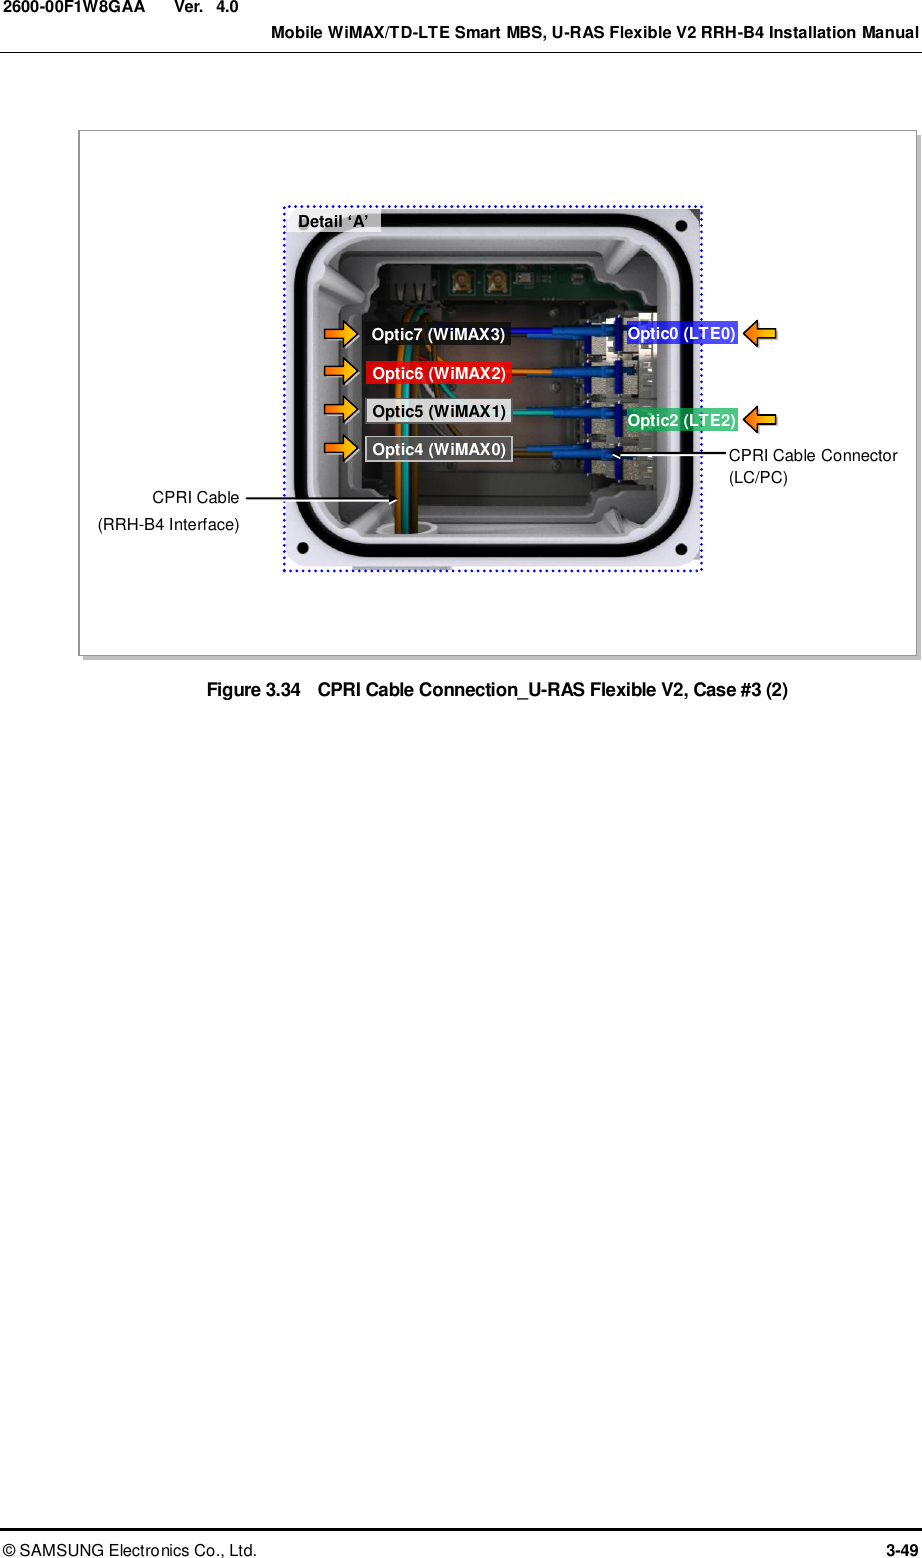  Ver.    Mobile WiMAX/TD-LTE Smart MBS, U-RAS Flexible V2 RRH-B4 Installation Manual ©  SAMSUNG Electronics Co., Ltd.  3-49 2600-00F1W8GAA 4.0  Figure 3.34  CPRI Cable Connection_U-RAS Flexible V2, Case #3 (2)  Detail ‘A’ CPRI Cable (RRH-B4 Interface) CPRI Cable Connector (LC/PC) Optic0 (LTE0) Optic2 (LTE2) Optic4 (WiMAX0) Optic6 (WiMAX2) Optic5 (WiMAX1) Optic7 (WiMAX3) 